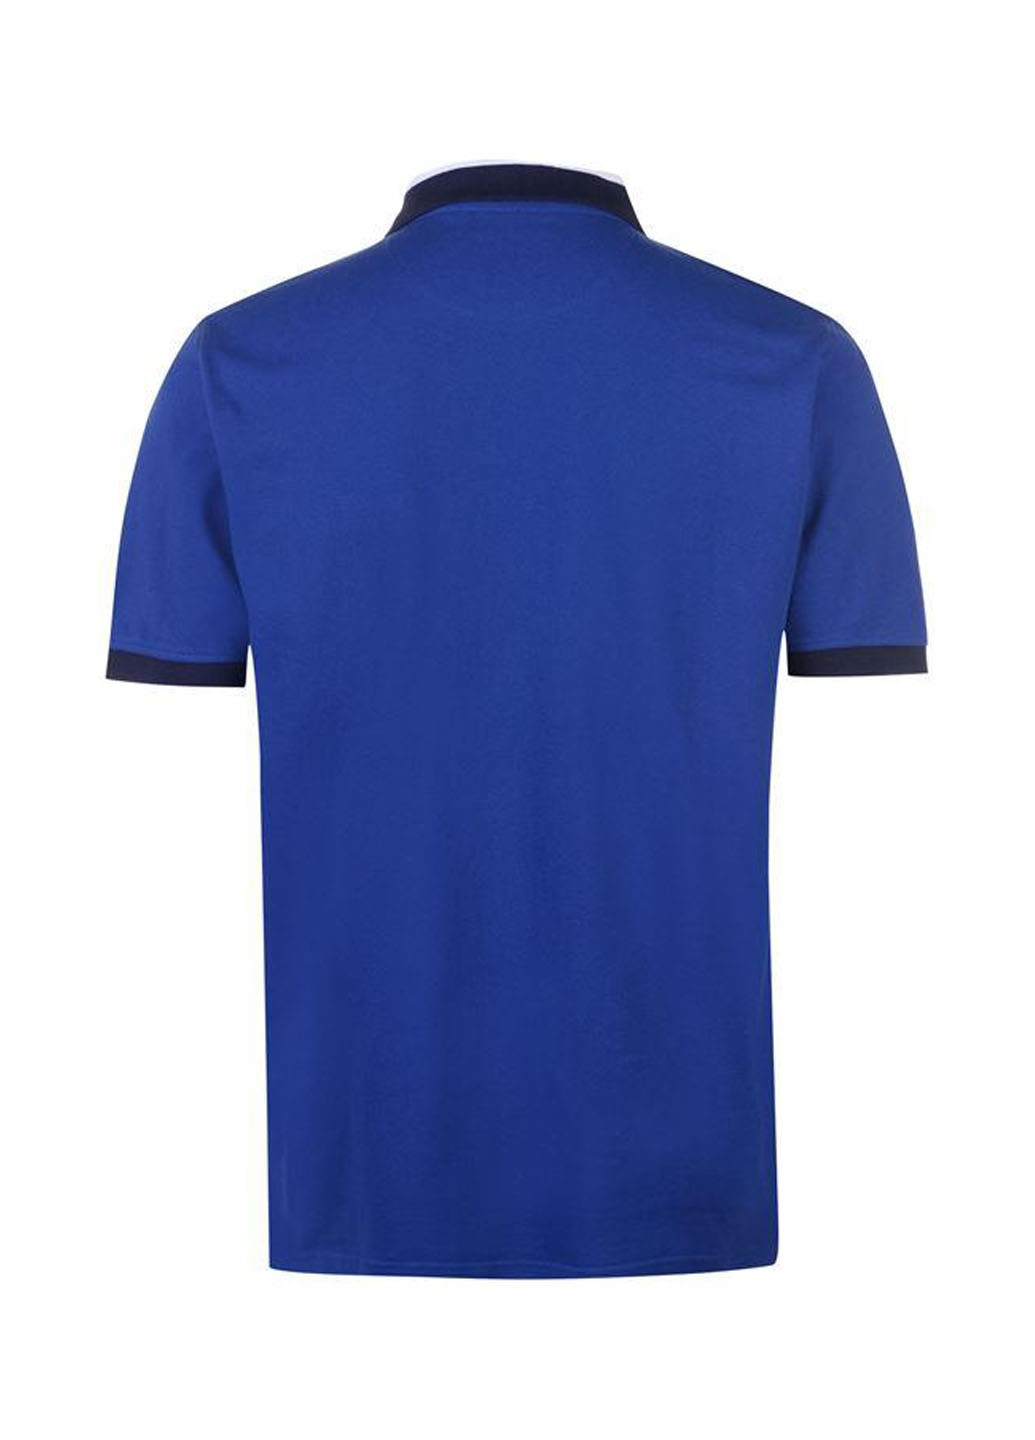 Синяя футболка-поло для мужчин Pierre Cardin с логотипом